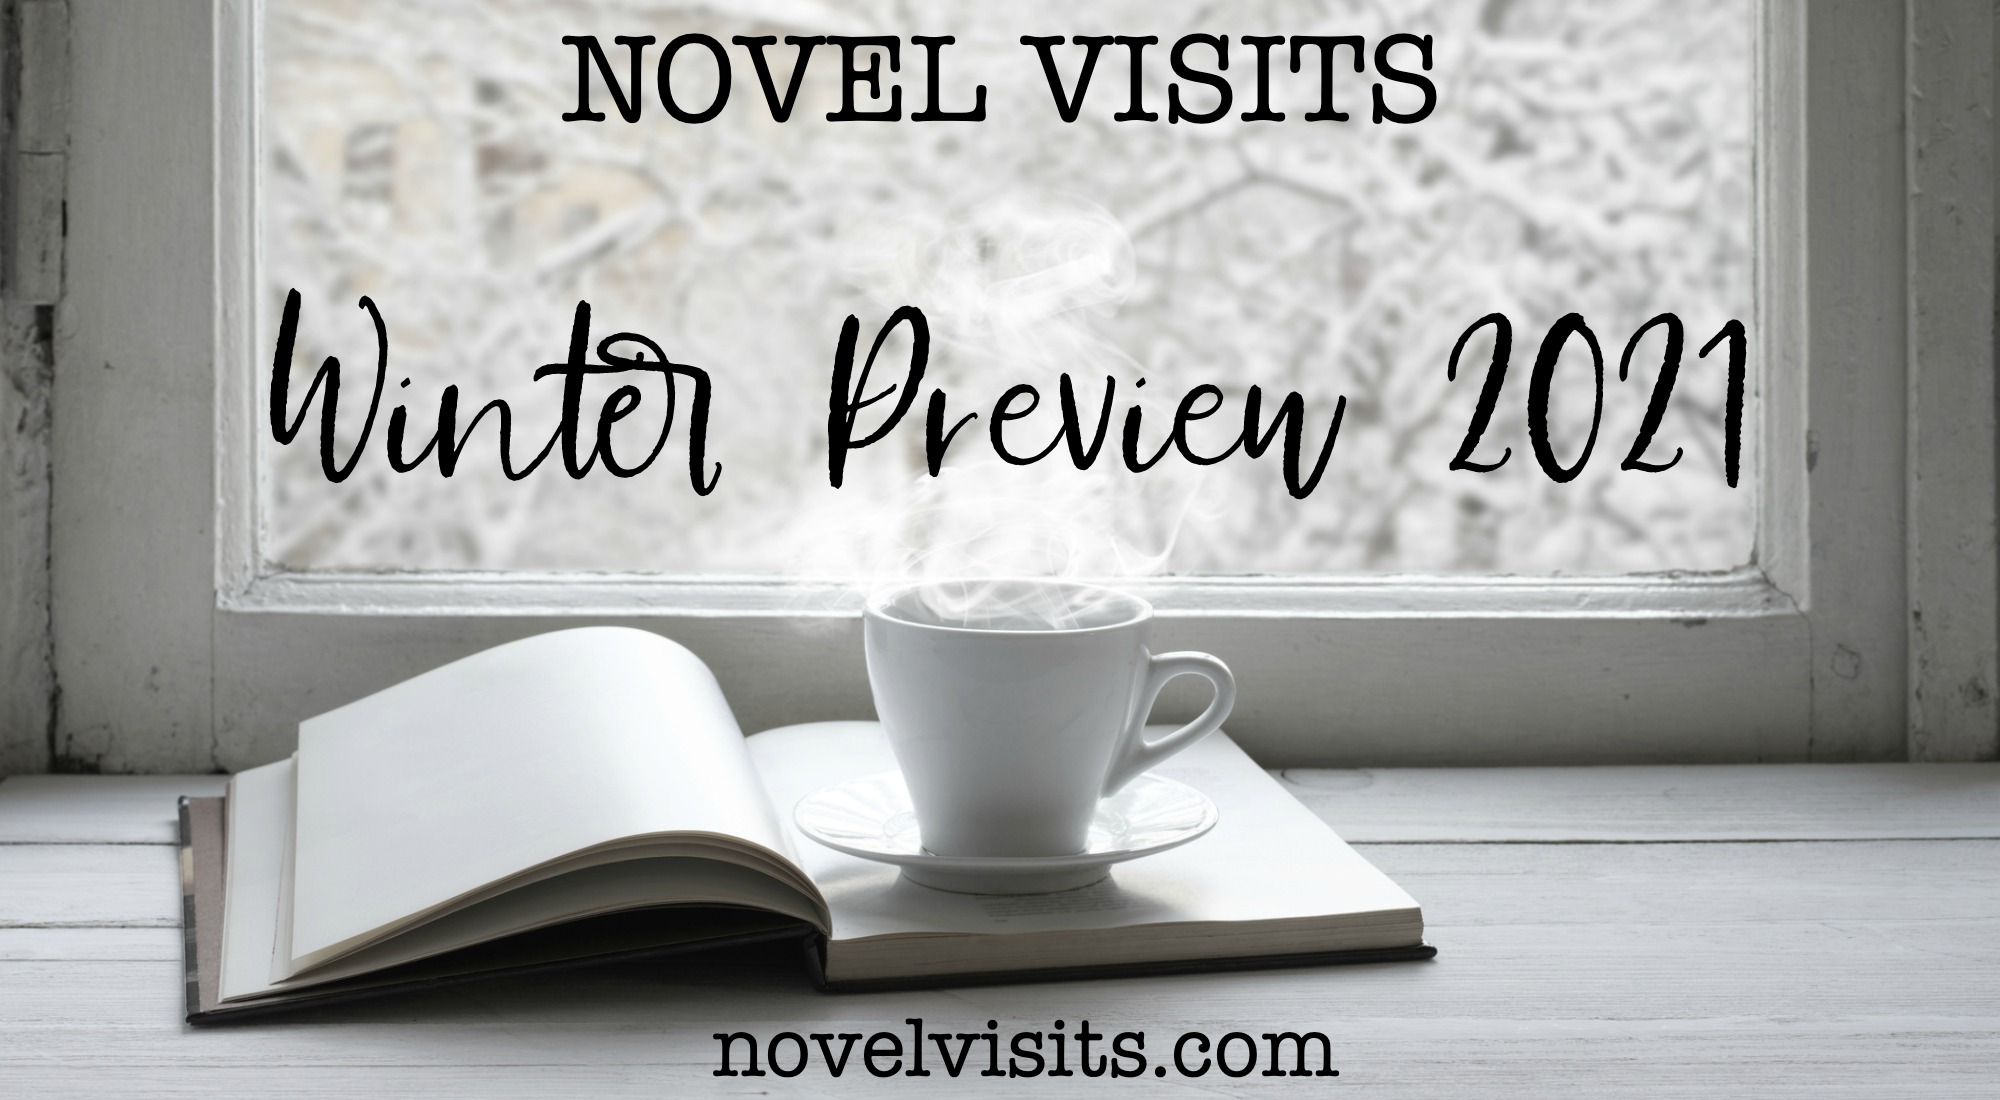 Novel Visits' Winter Preview 2021